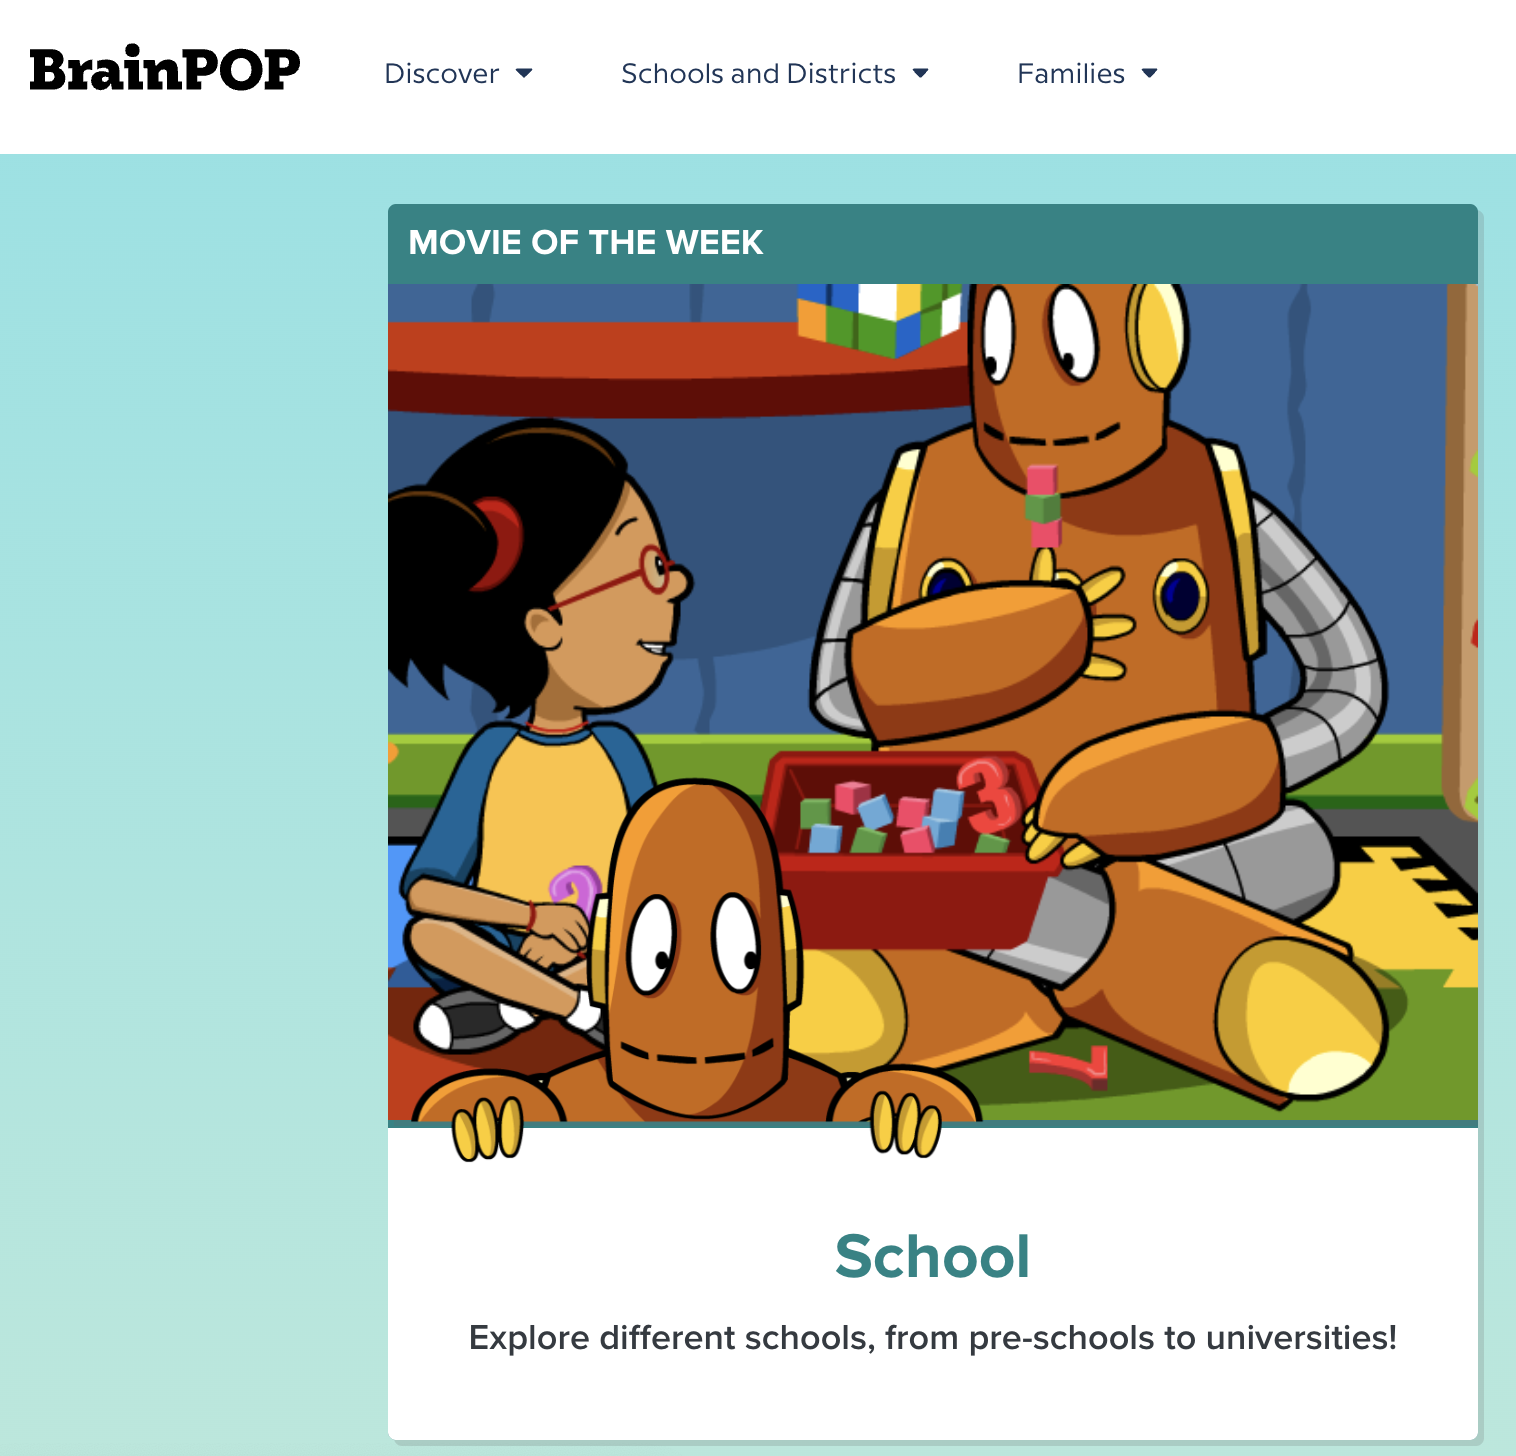 image shows a screenshot of the BrainPopJr. website